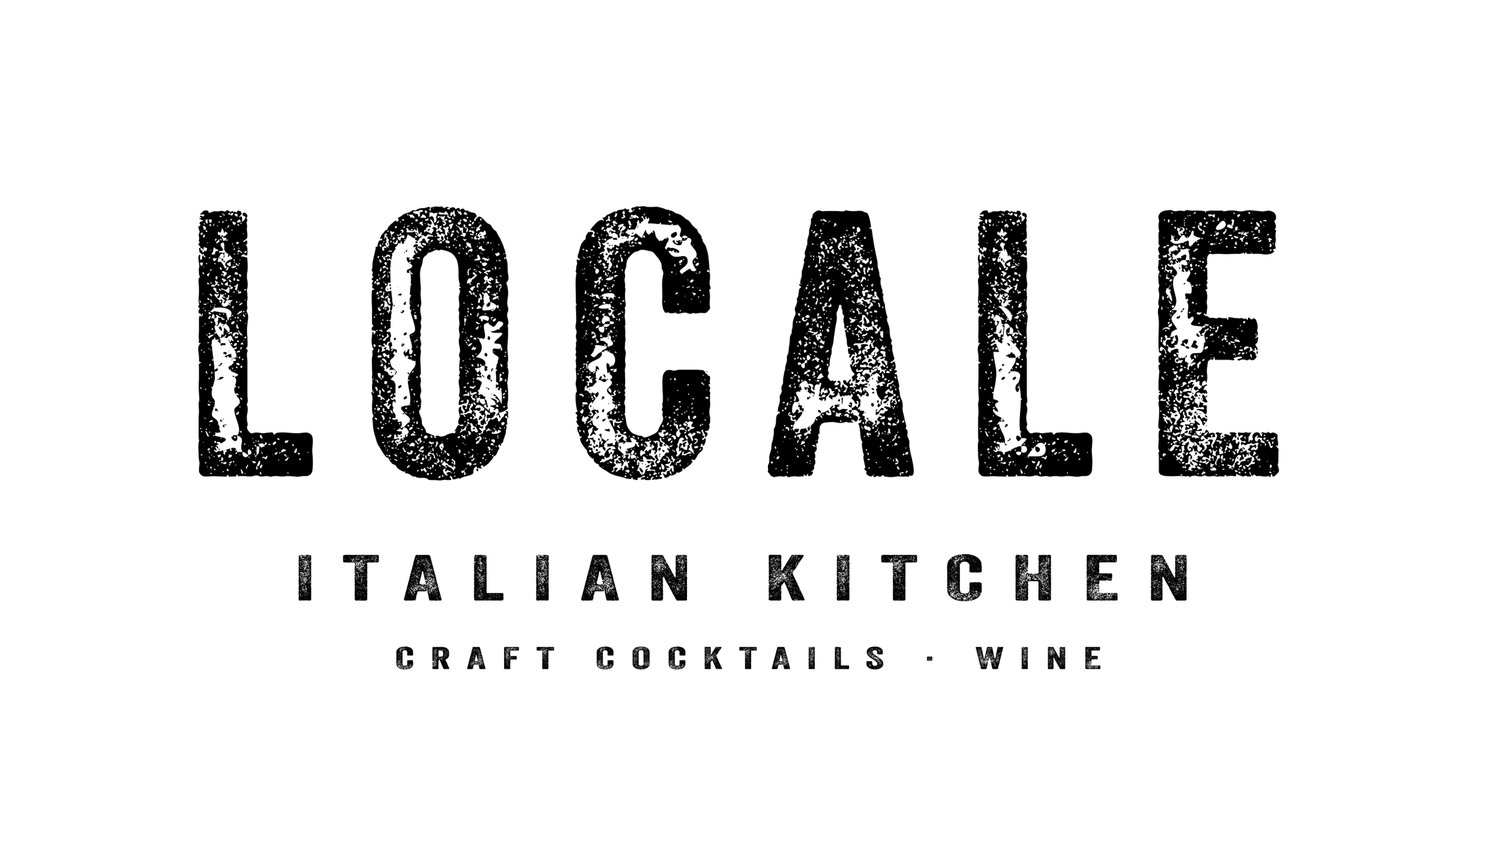 Locale Italian Kitchen & Craft Cocktails